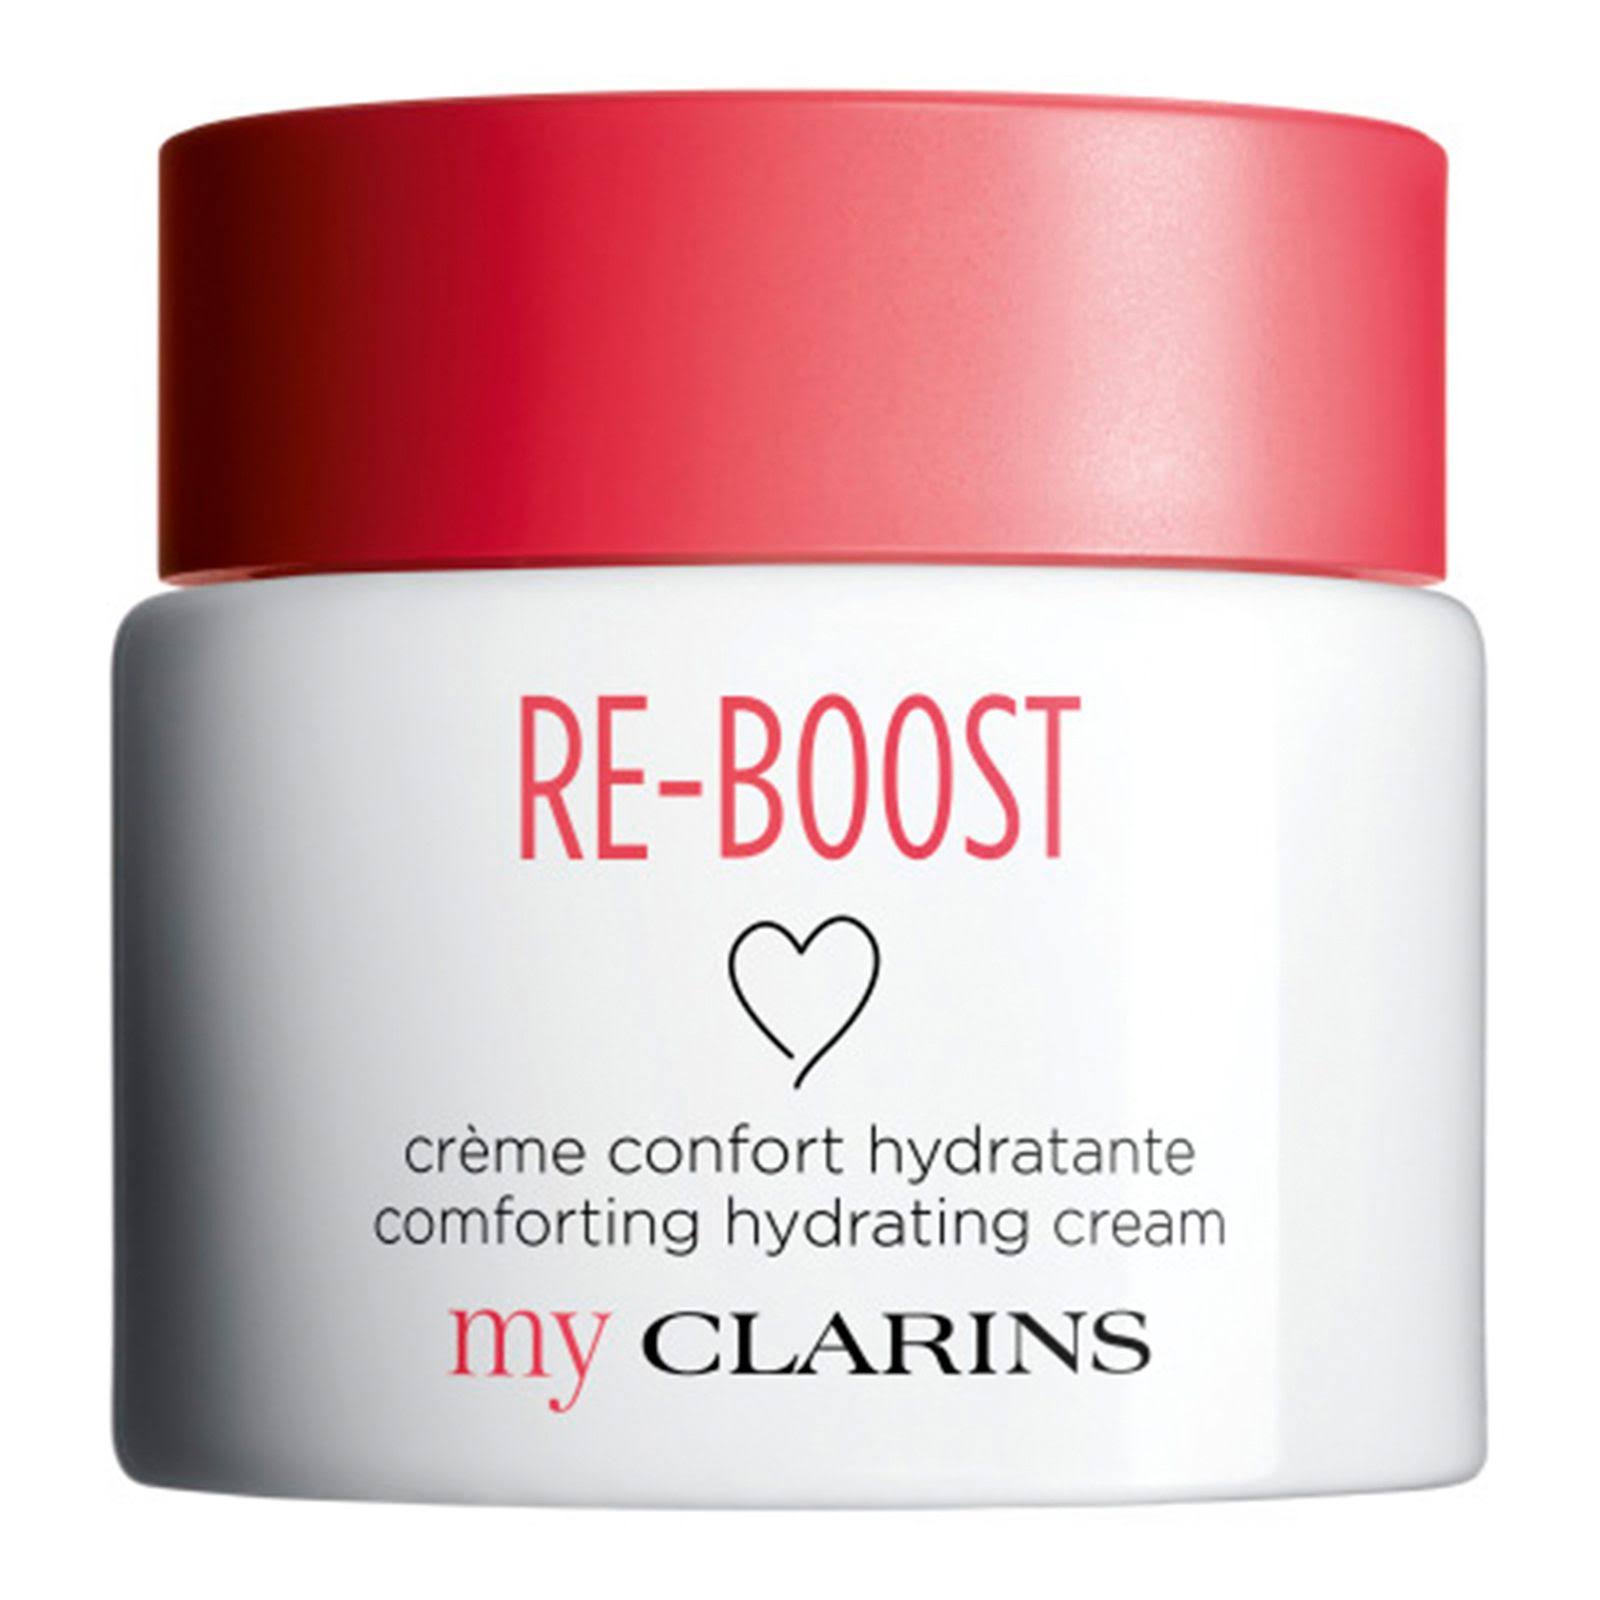 Clarins Re-Boost Comforting Hydrating Cream Dry Skin 50ml